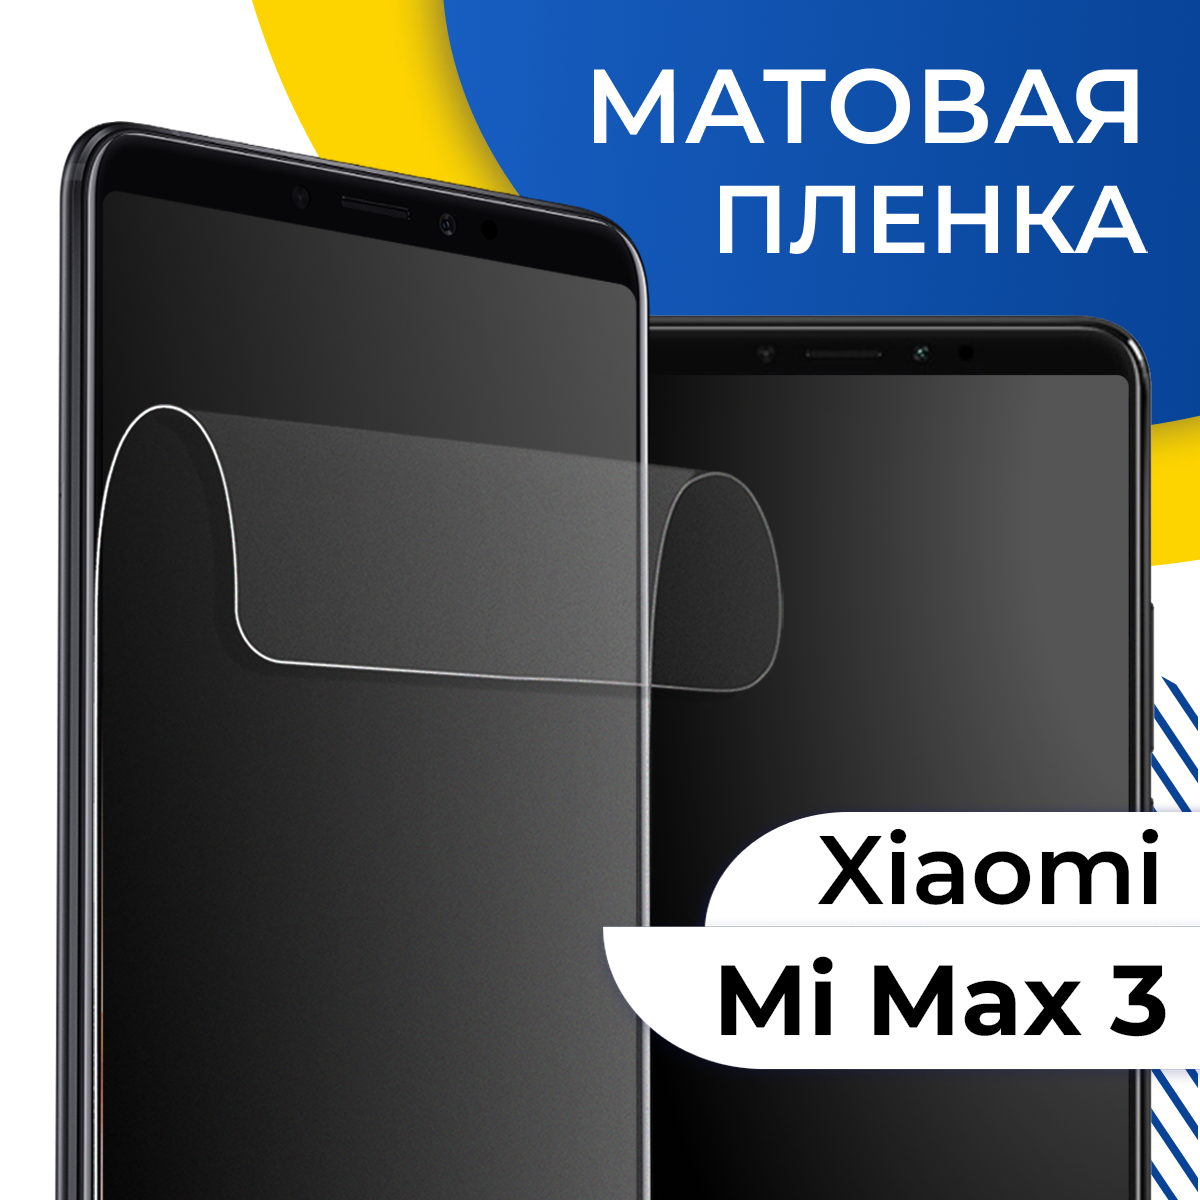 Матовая гидрогелевая пленка для телефона Xiaomi Mi Max 3 / Самовосстанавливающаяся защитная пленка на смартфон Сяоми Ми Макс 3 / Противоударная